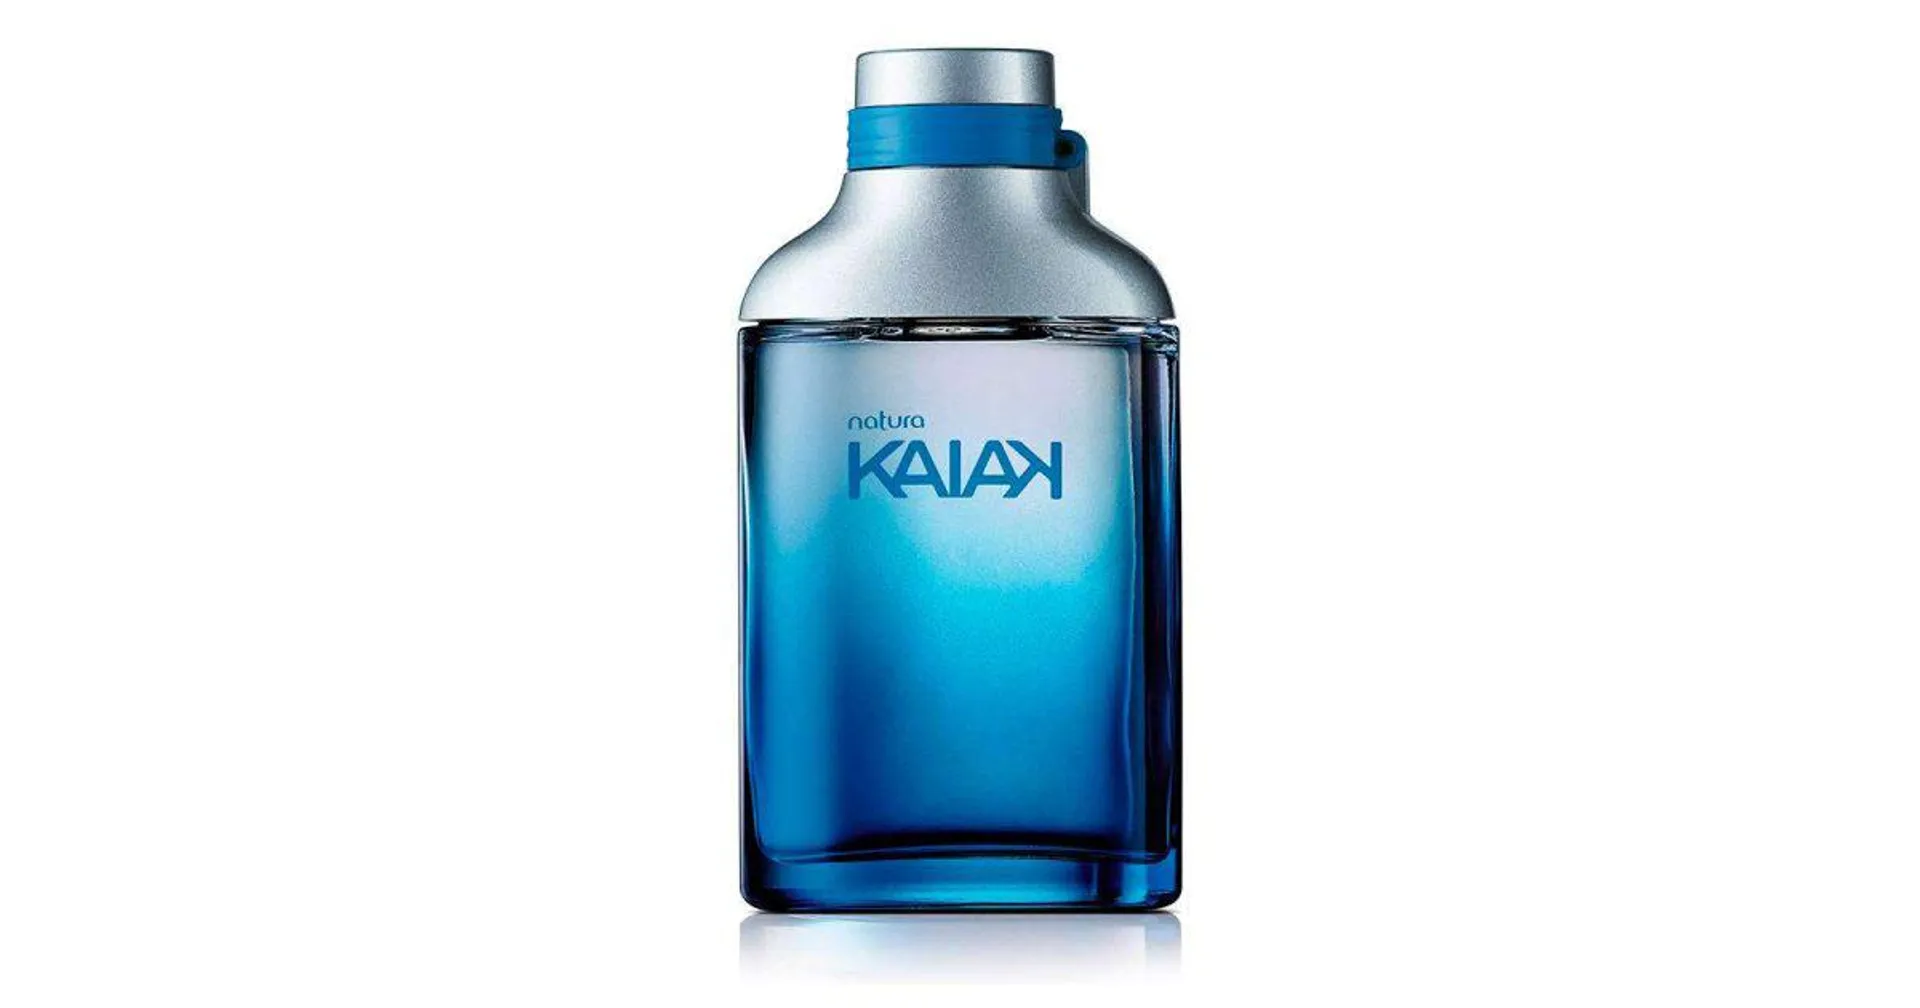 Kaiak eau de toilette masculino clásico 100 ml